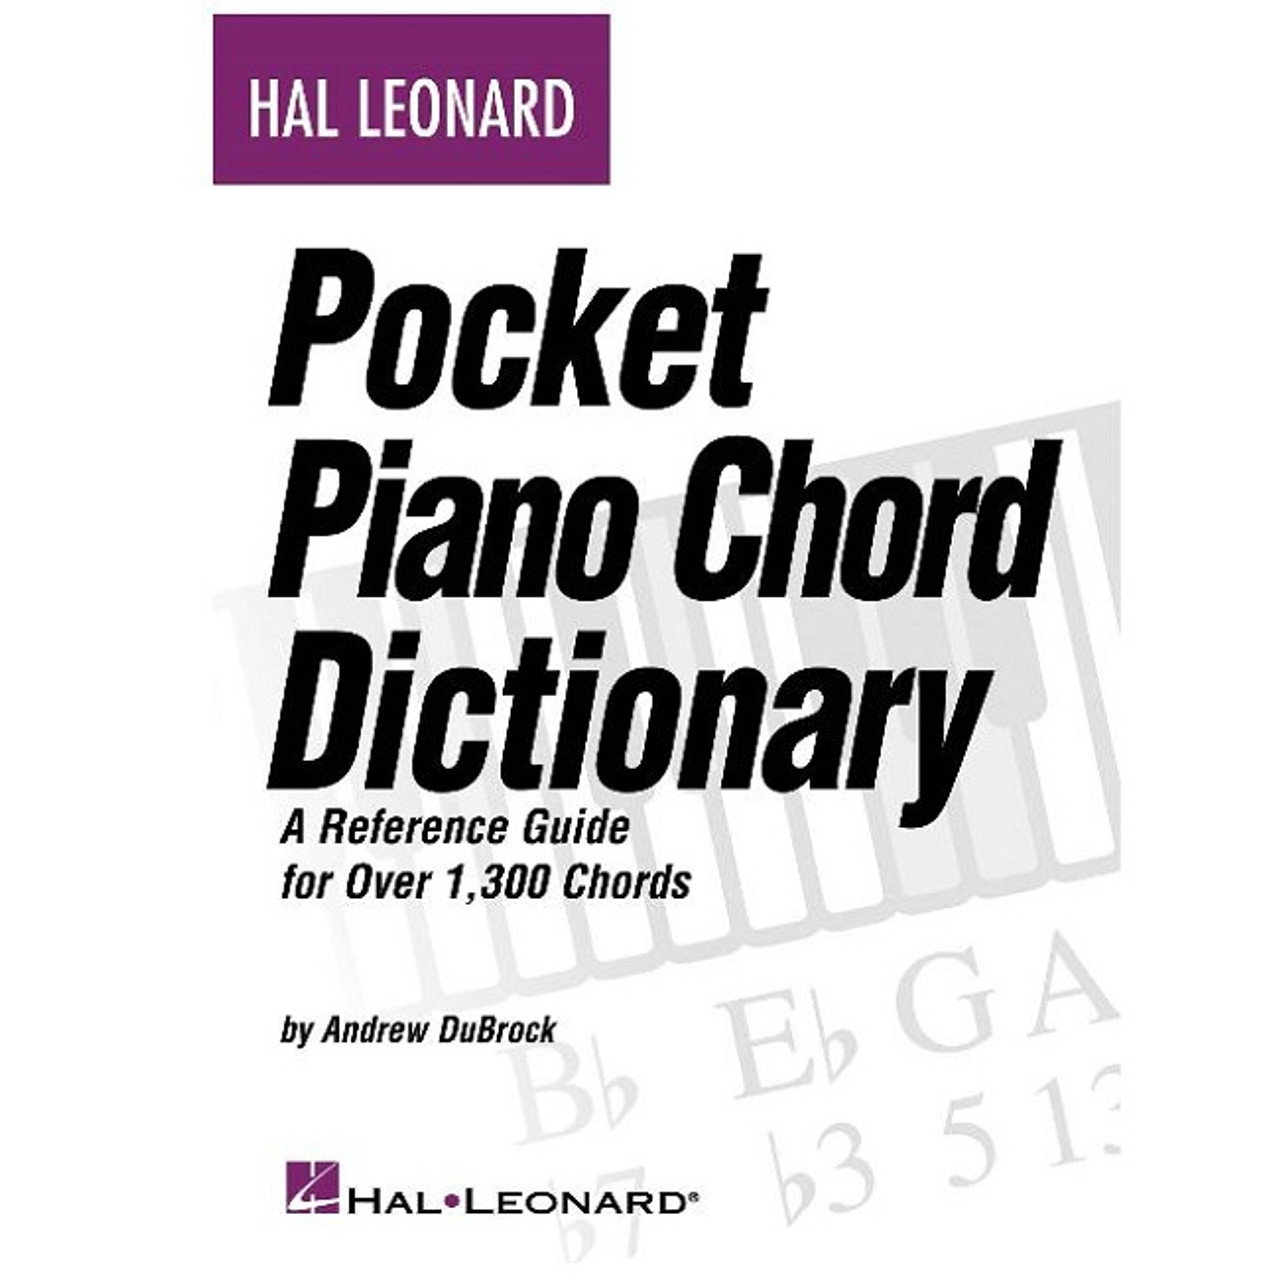 Pocket Piano Chord Dictionary